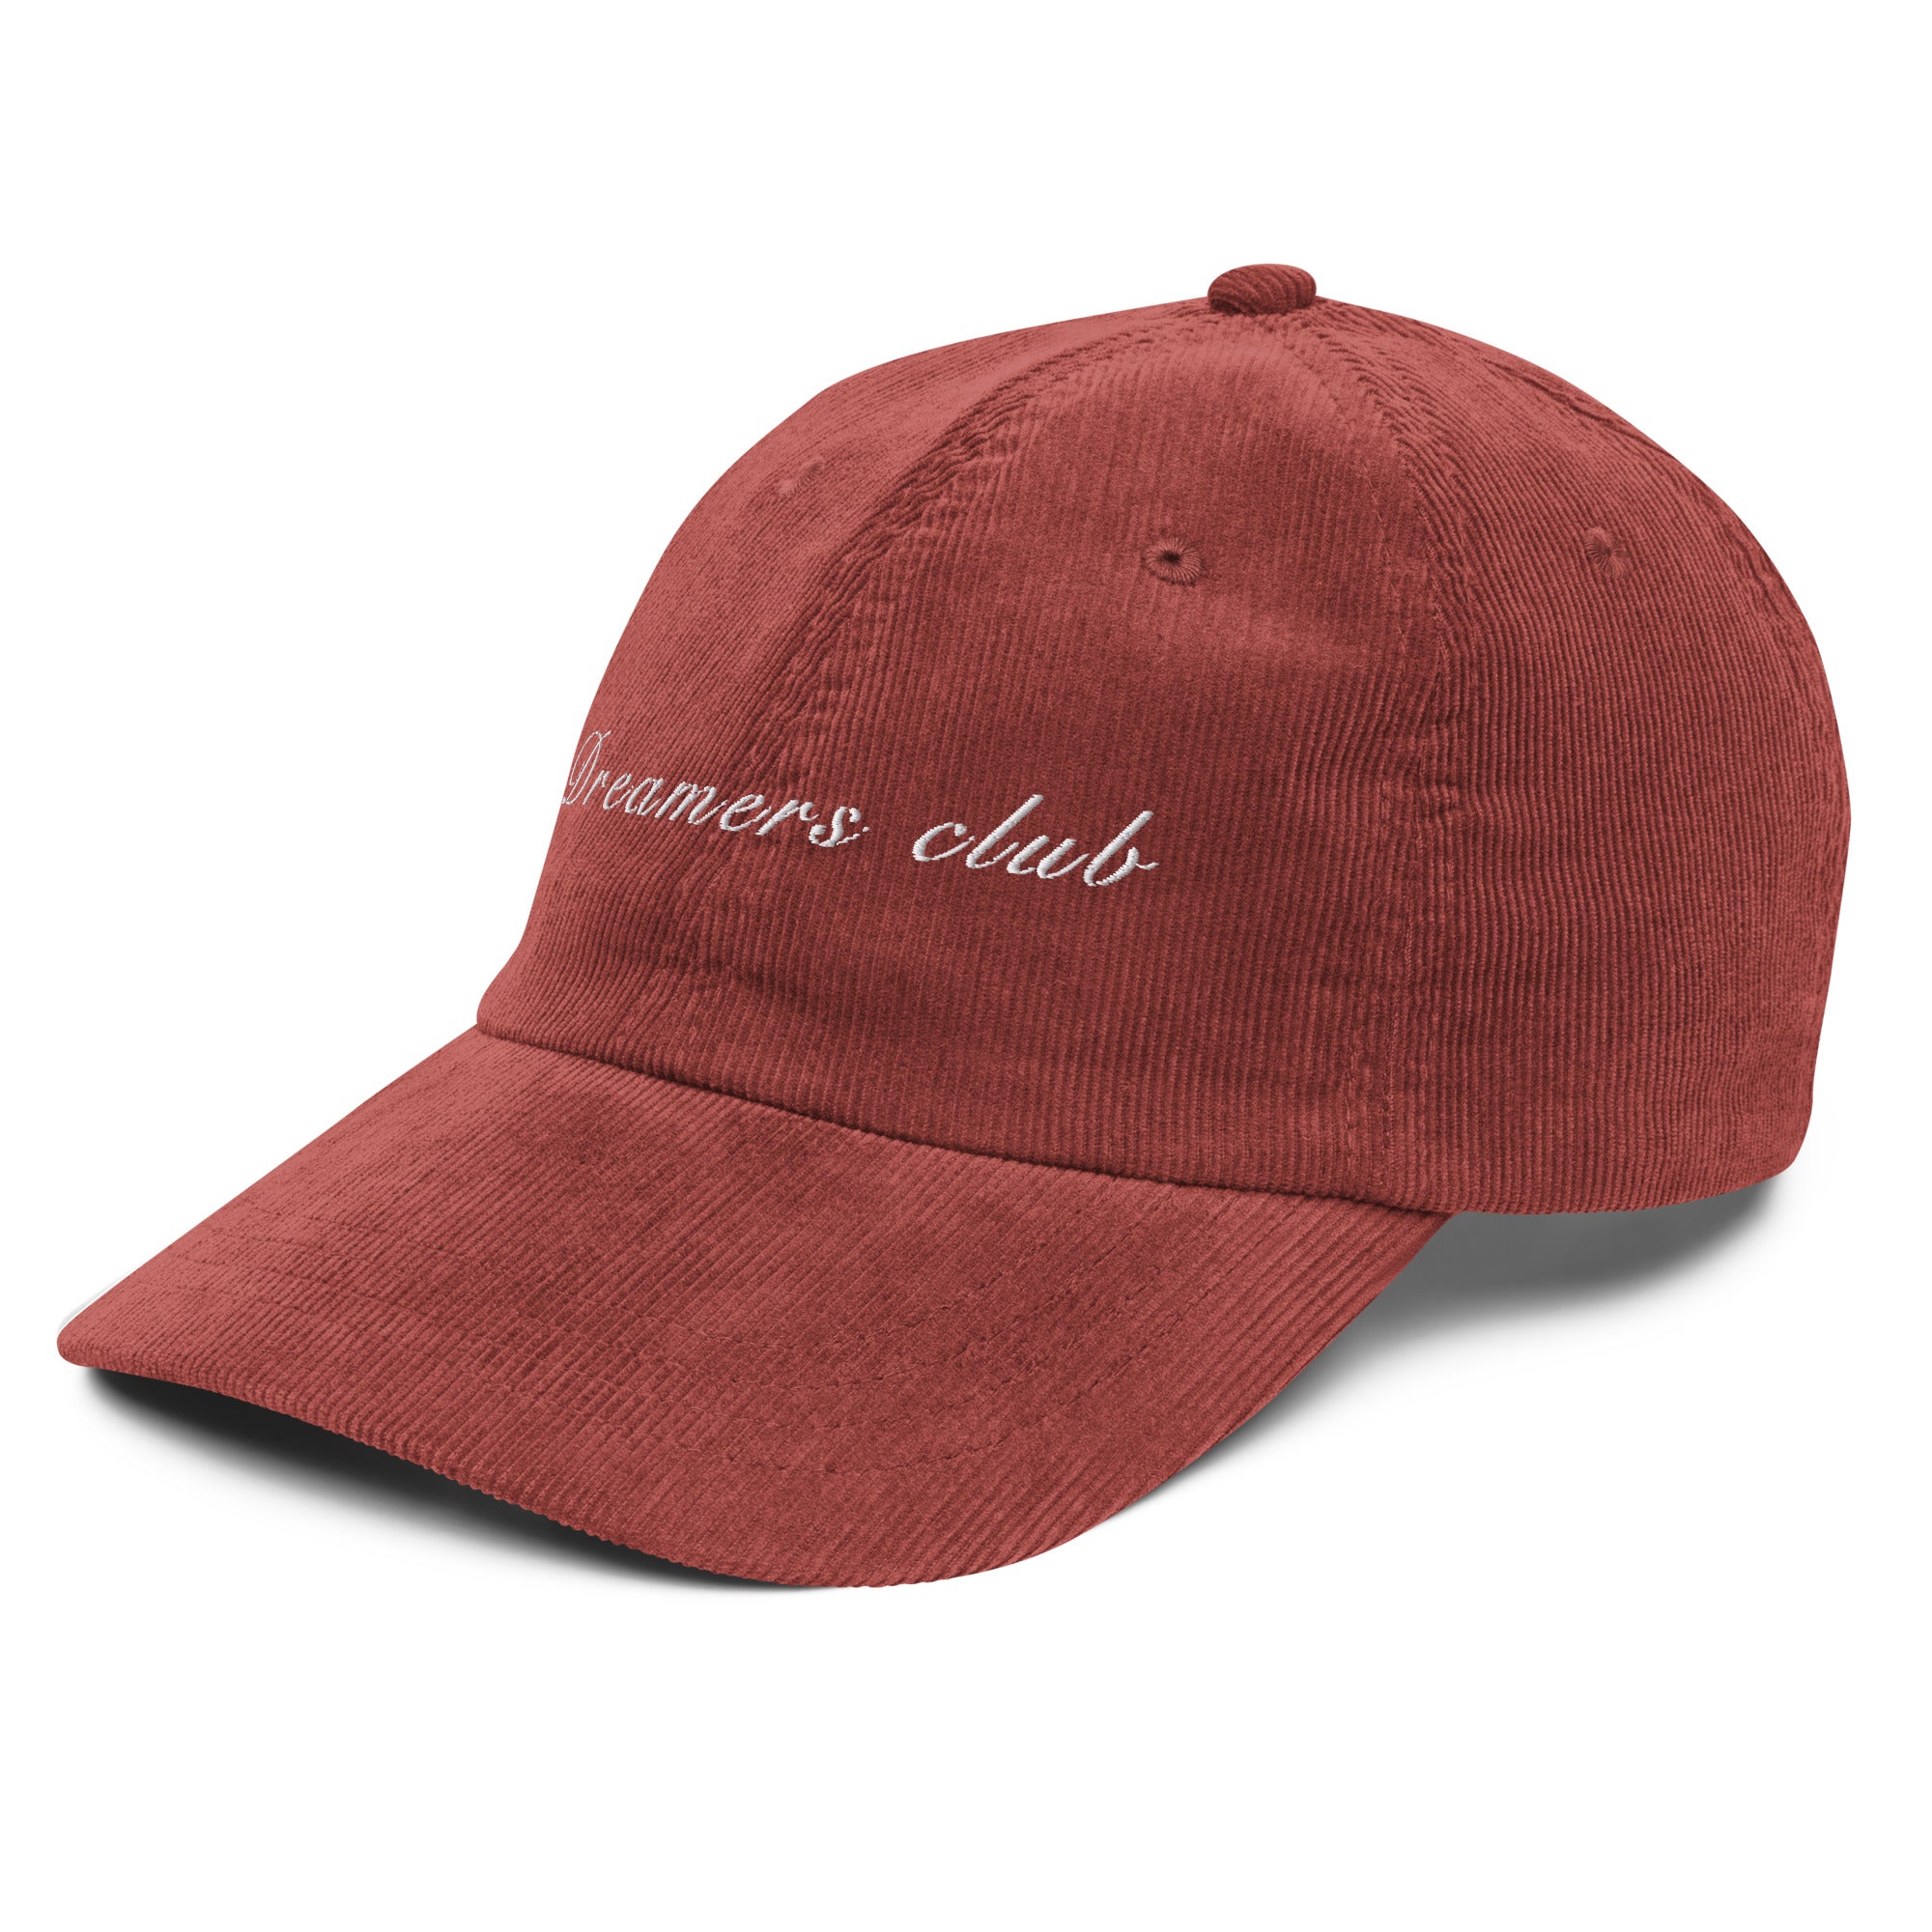 Dreamers Hat